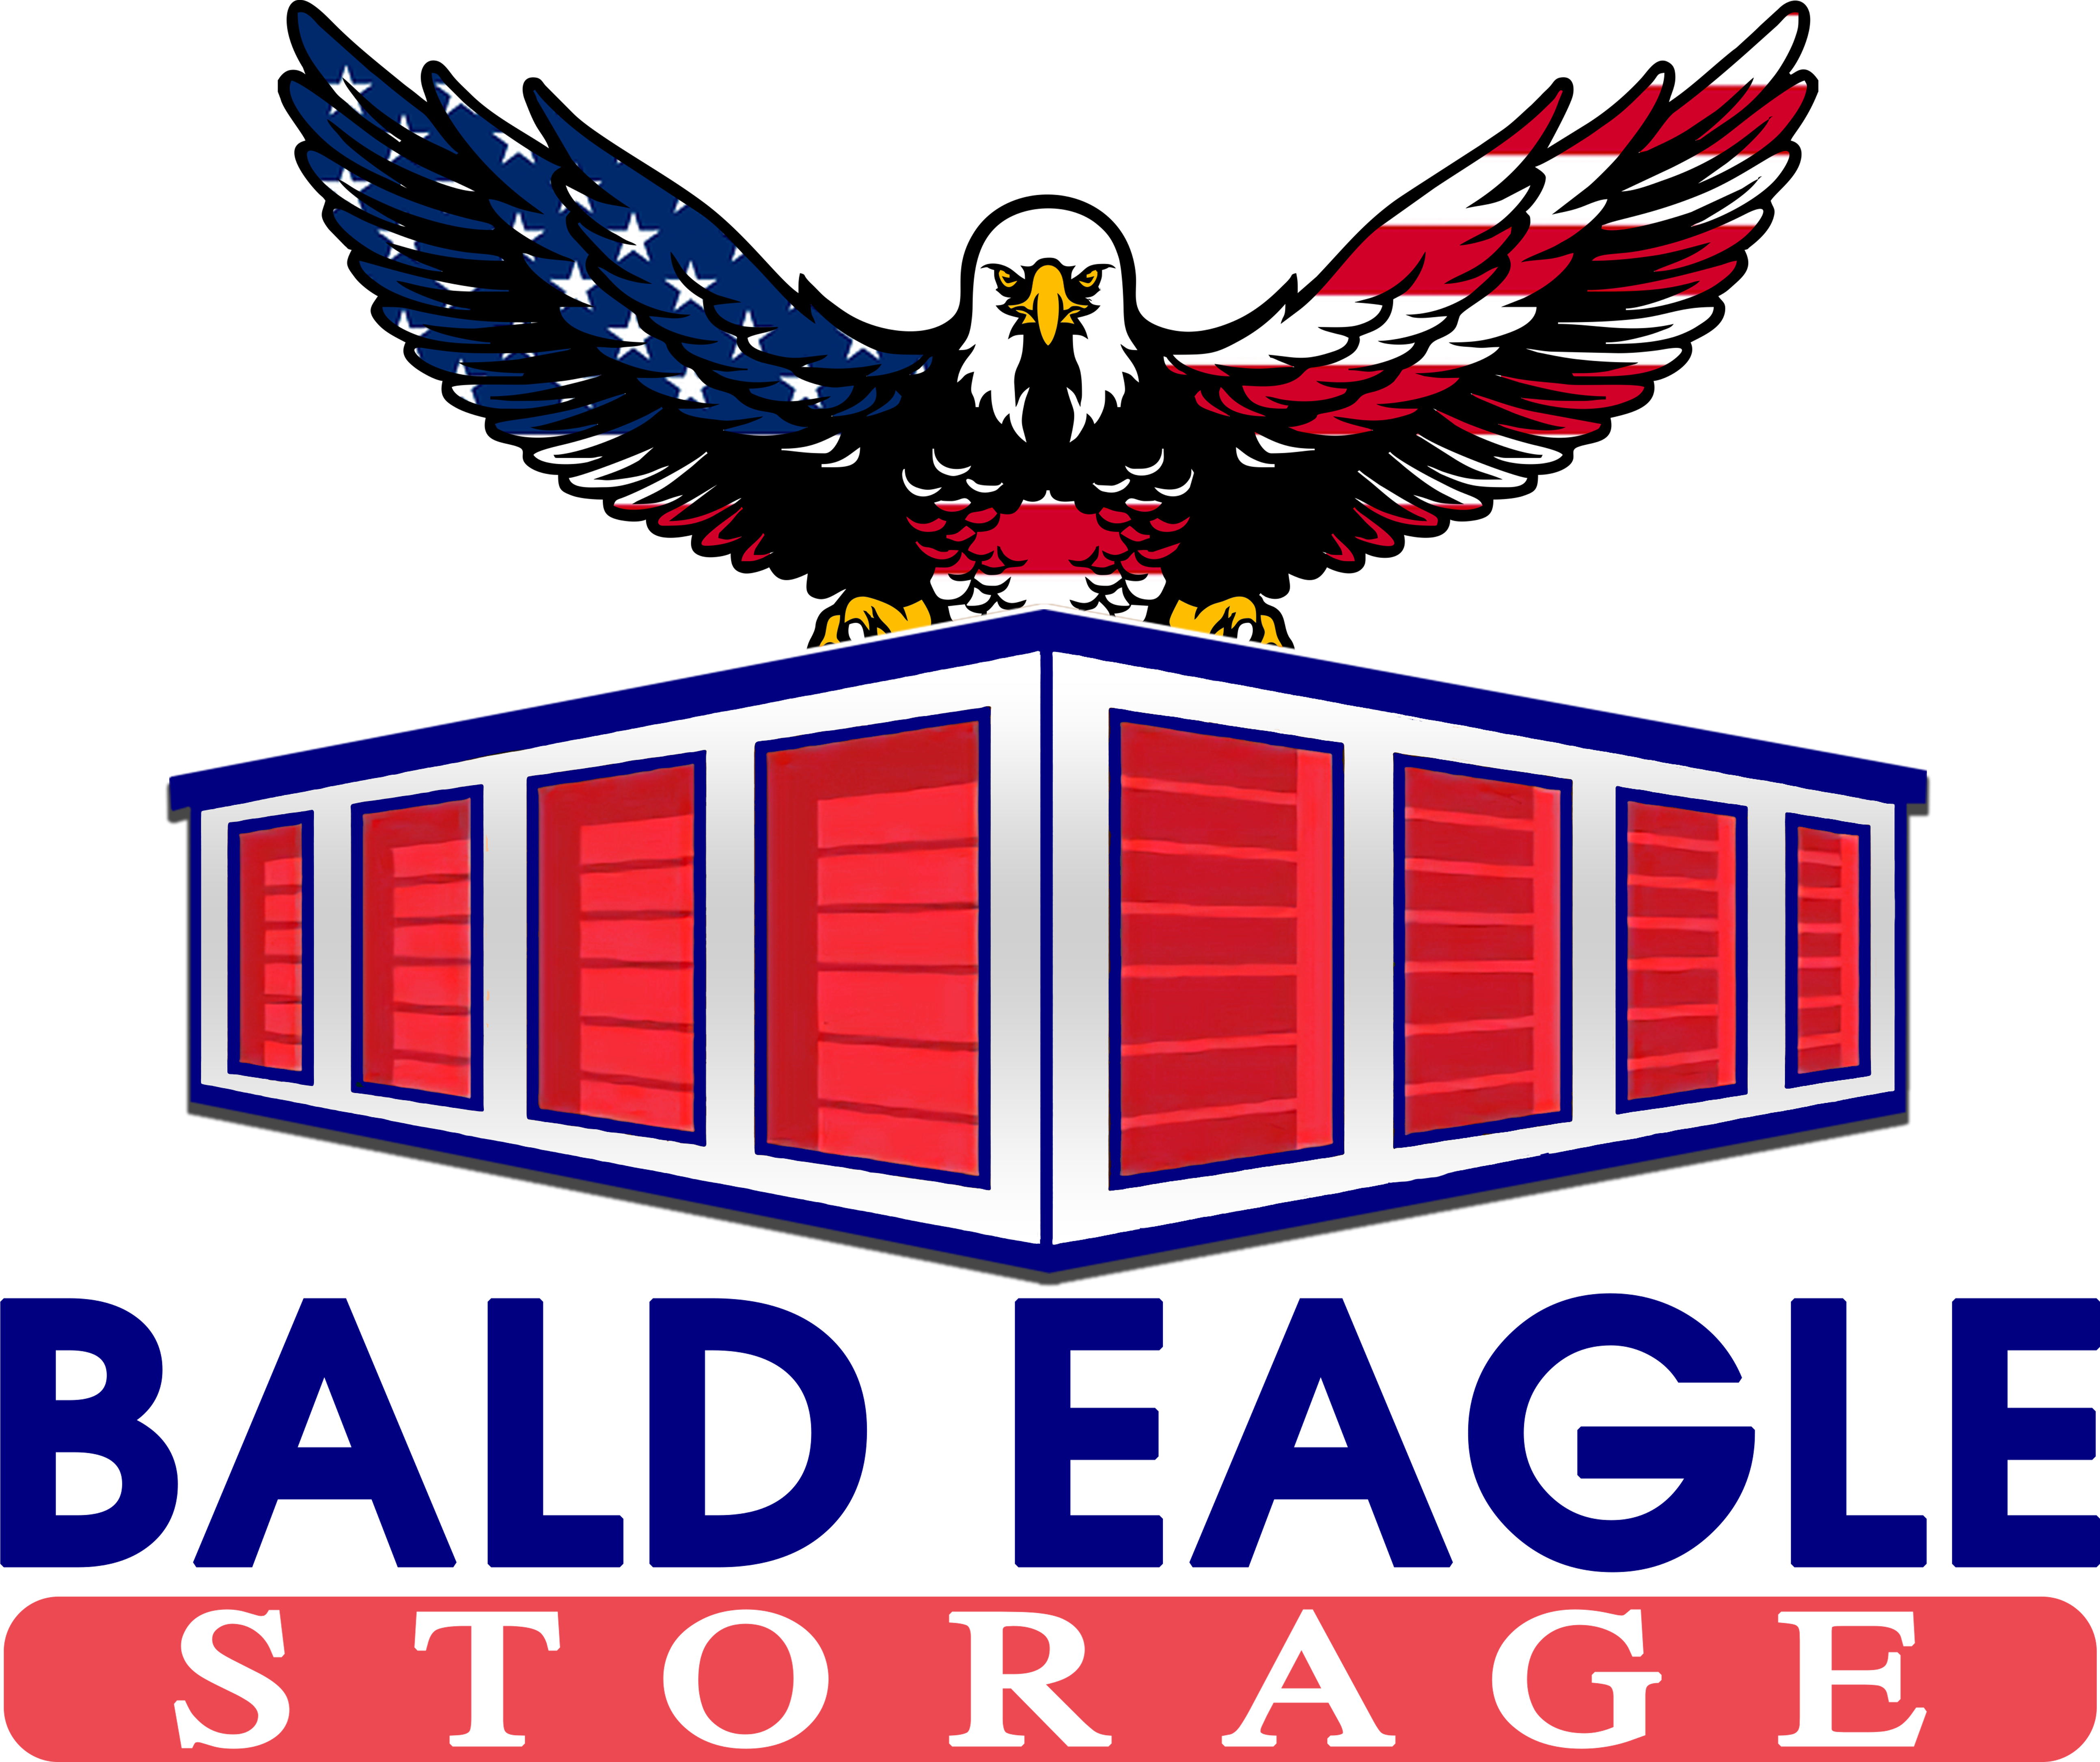 Bald Eagle Storage Logo